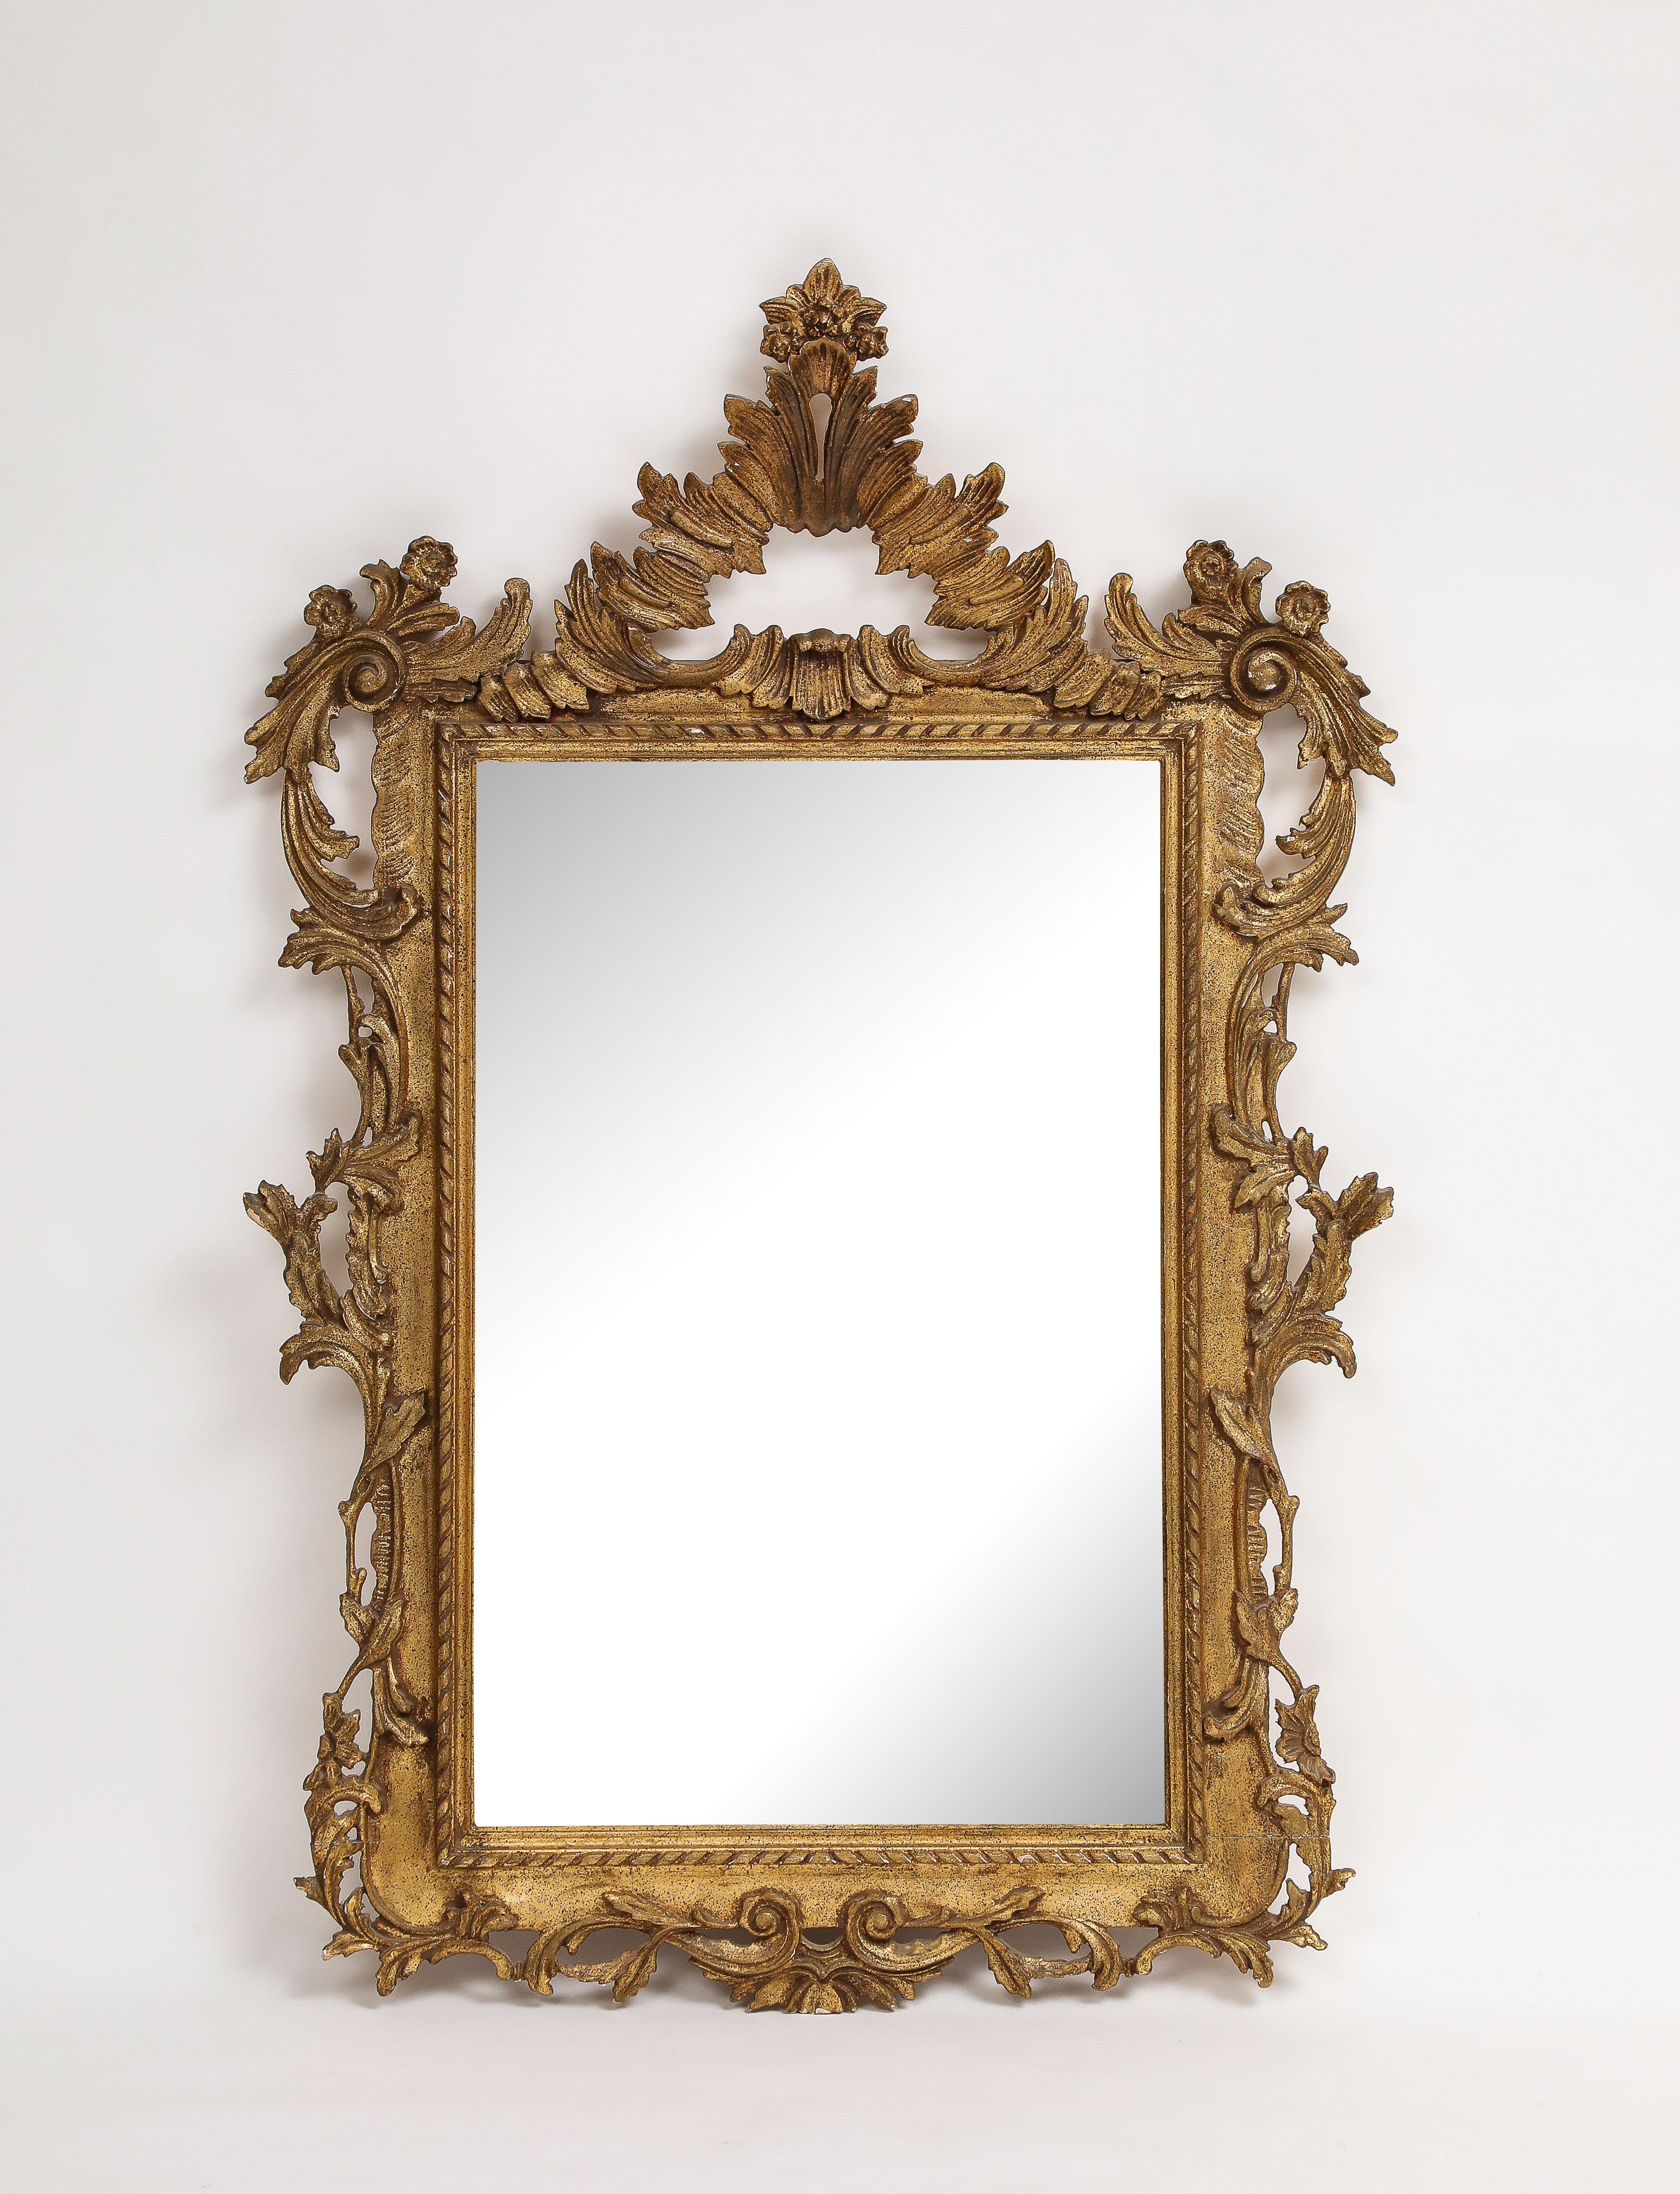 Midcentury Italian giltwood mirror, Rococo style, by John Widdicomb. Stamped 